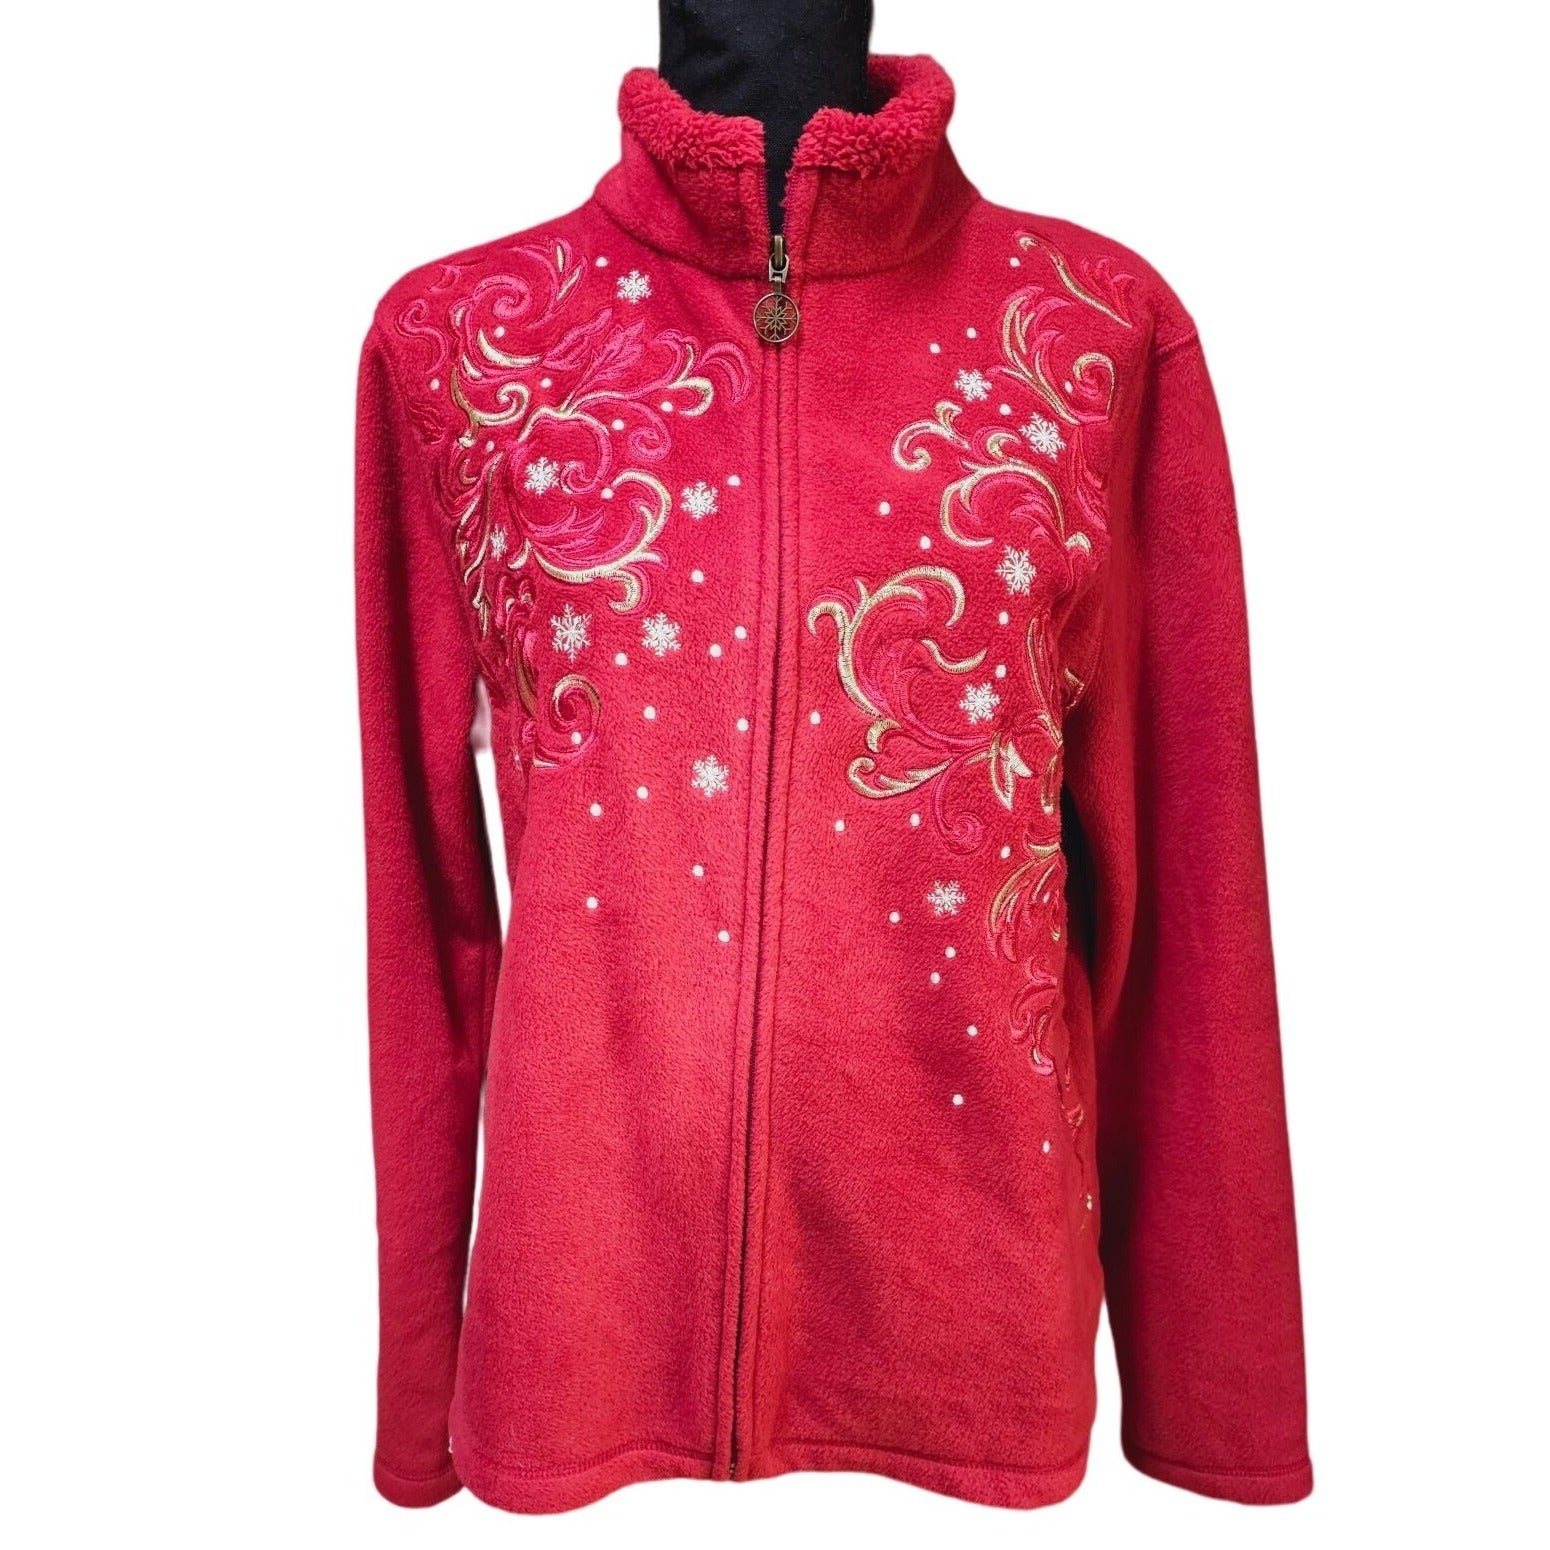 Croft & Barrow Red Fleece Whimsical Front Pattern Full Zip Jacket Coat, Size M